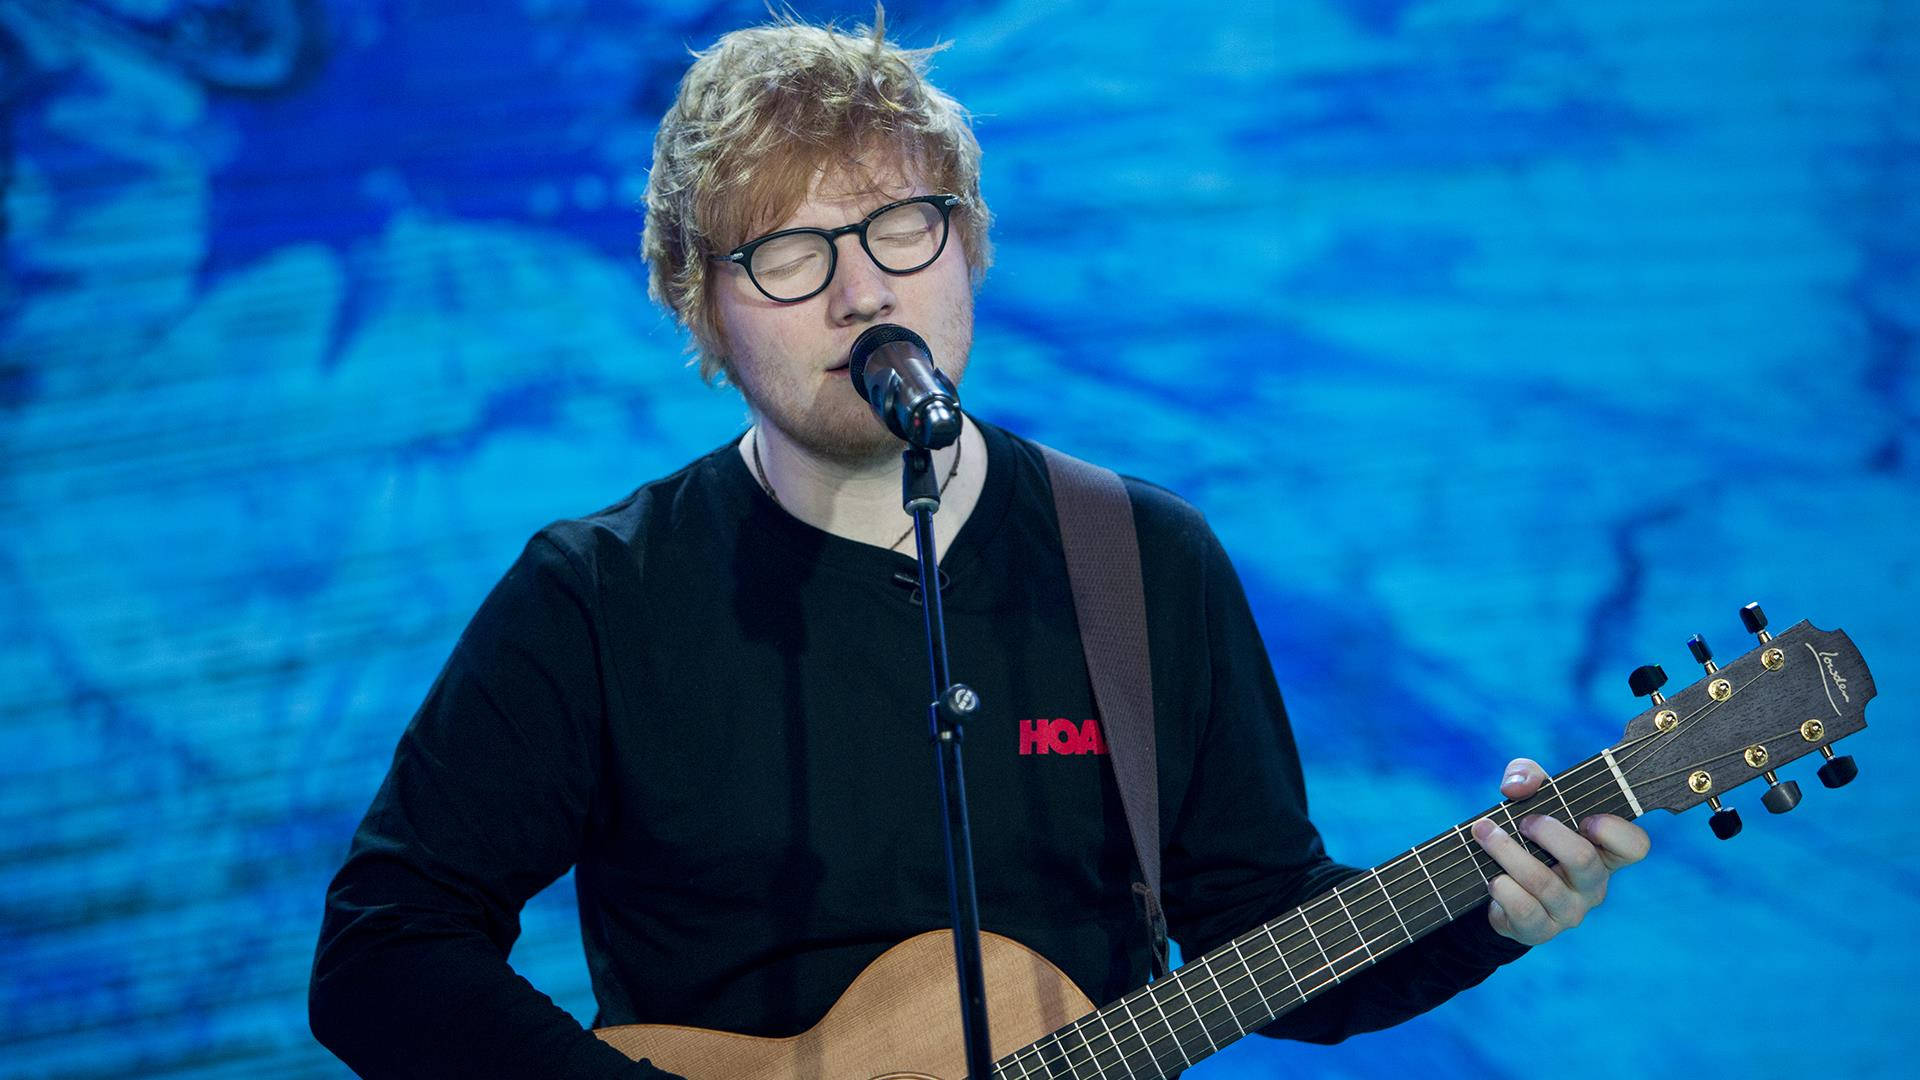 Image  Ed Sheeran singing Live Wallpaper